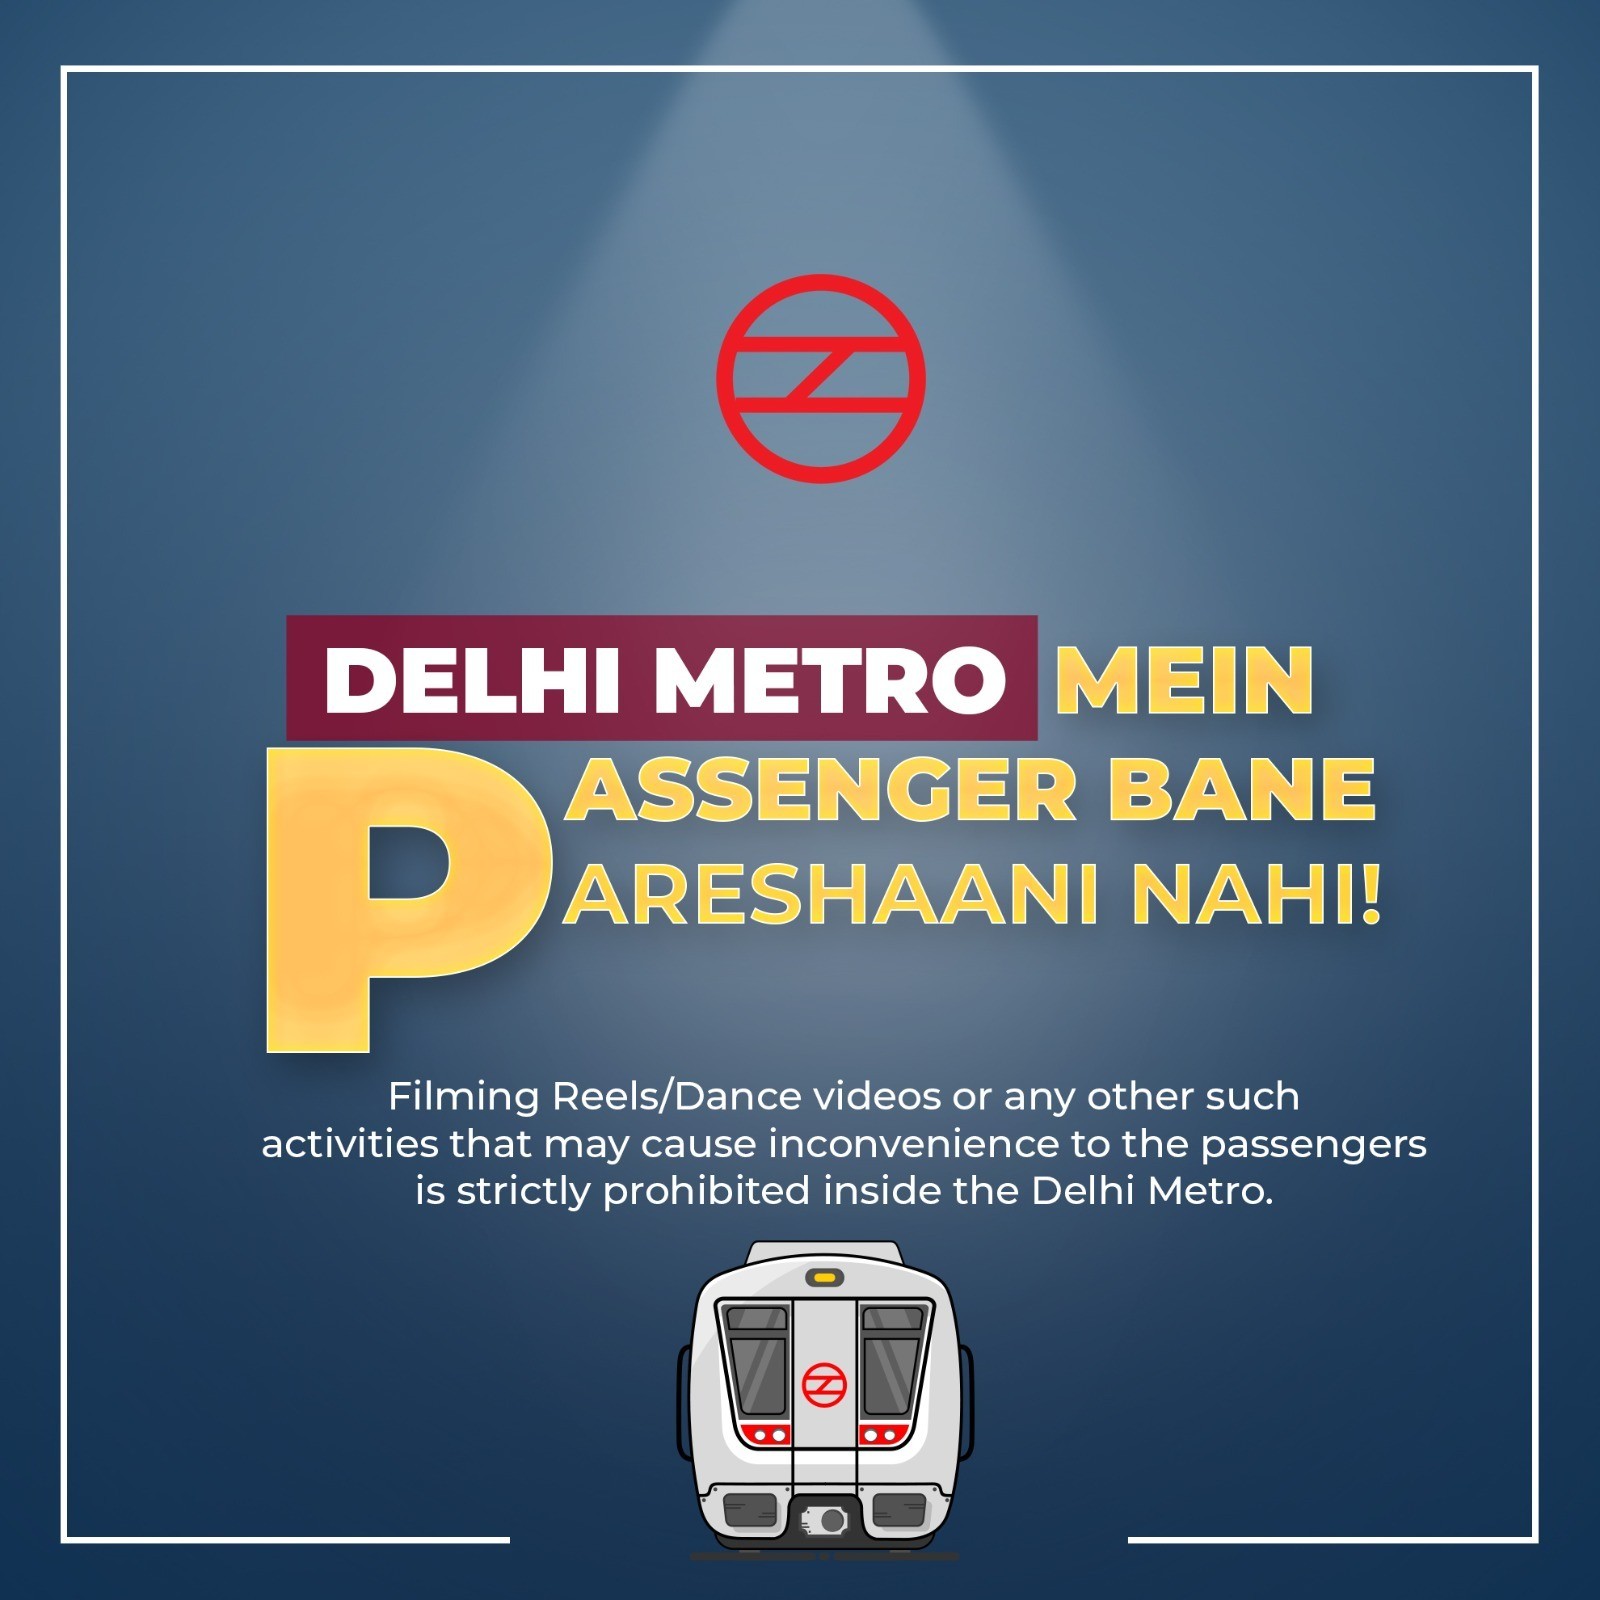 No More Metro Reels As DMRC Reinforces Ban On Filming Inside Delhi Metro Trains